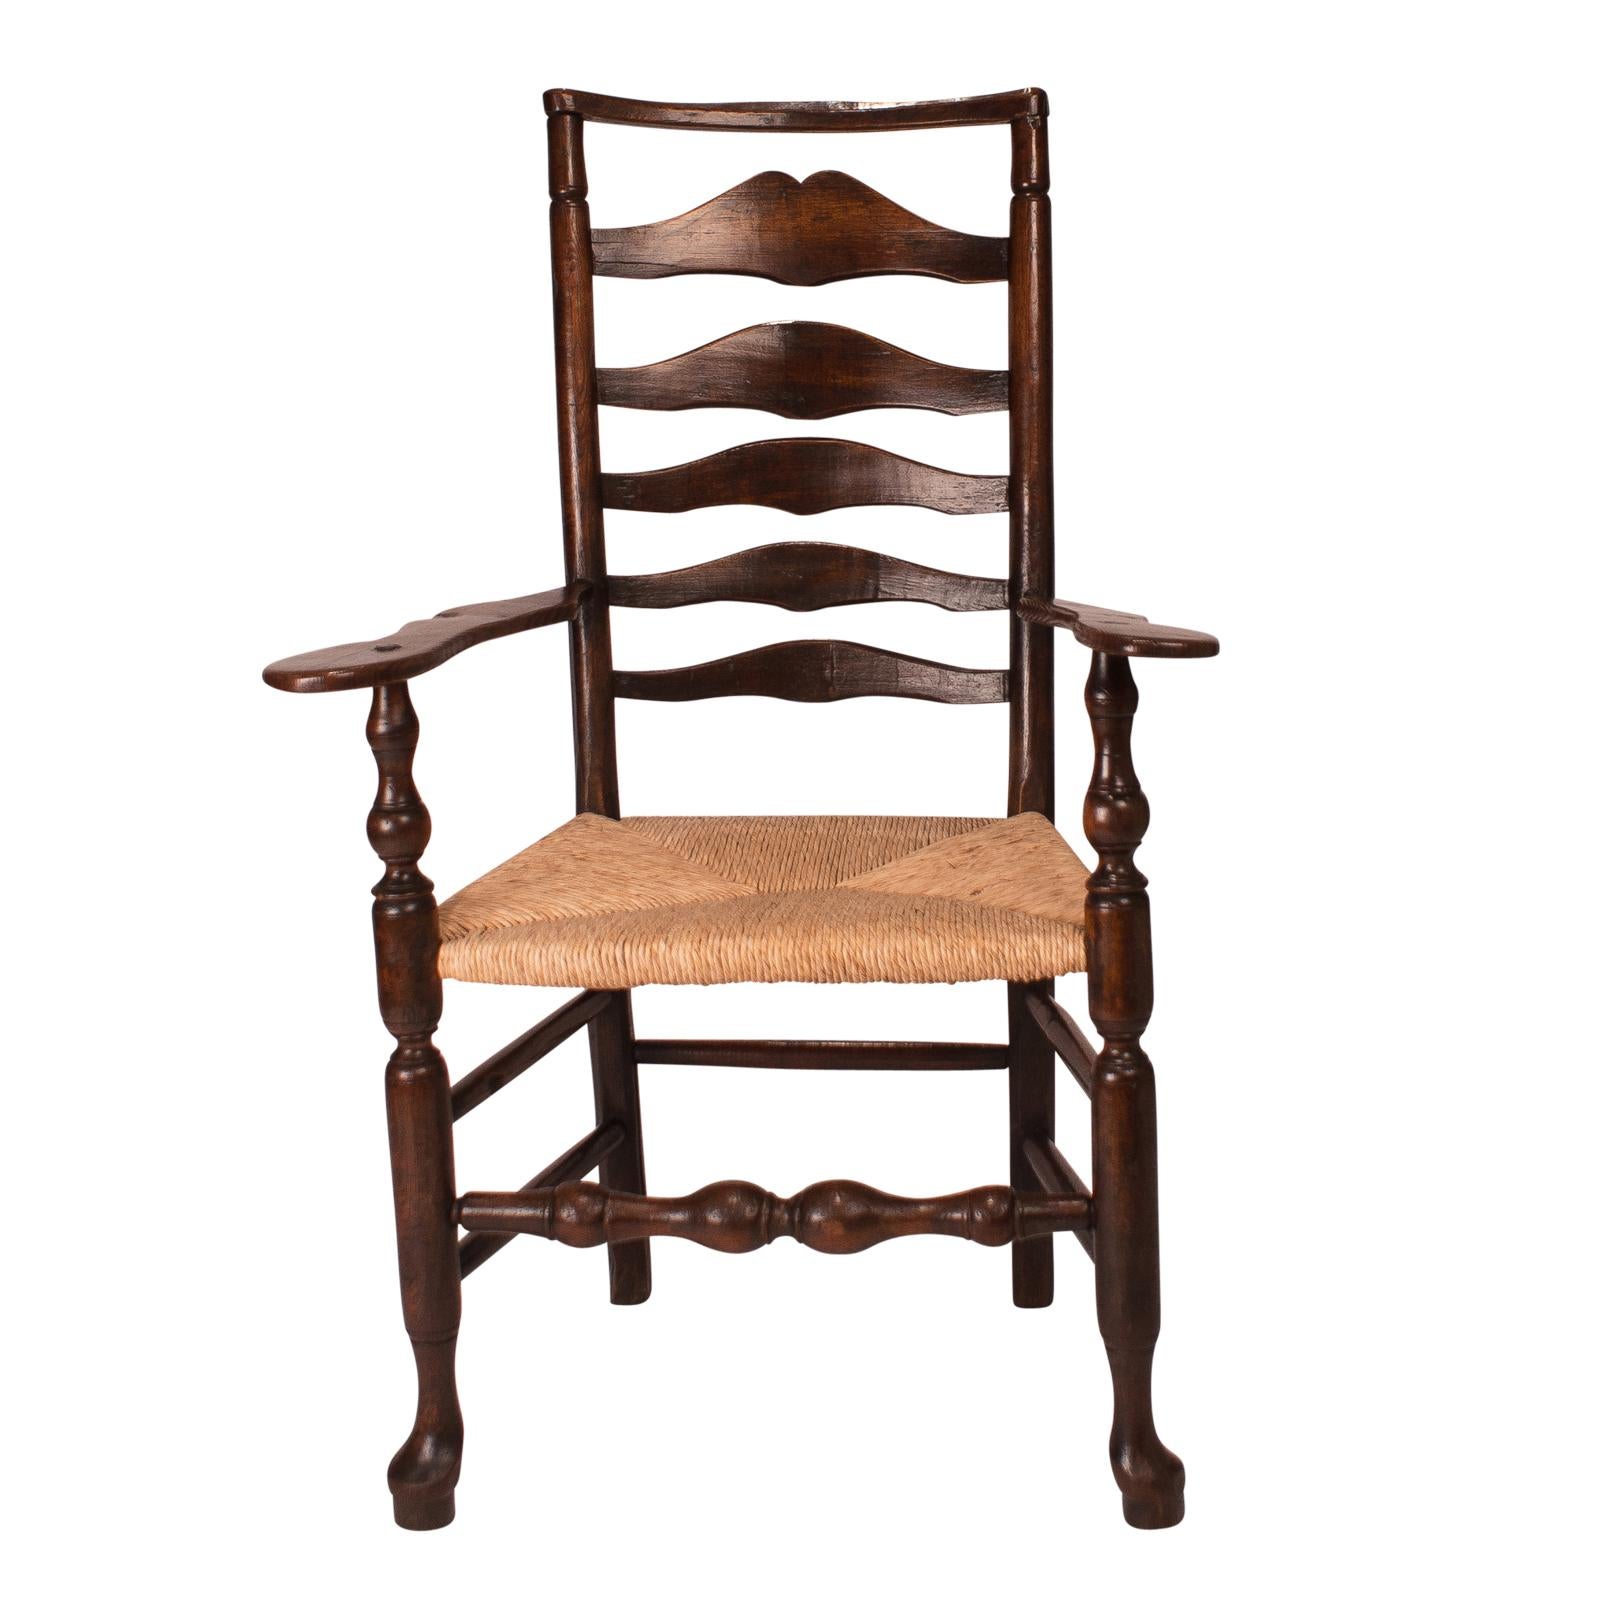 An English oak wavy ladder back Lancashire armchair with a rush seat, circa 1820.